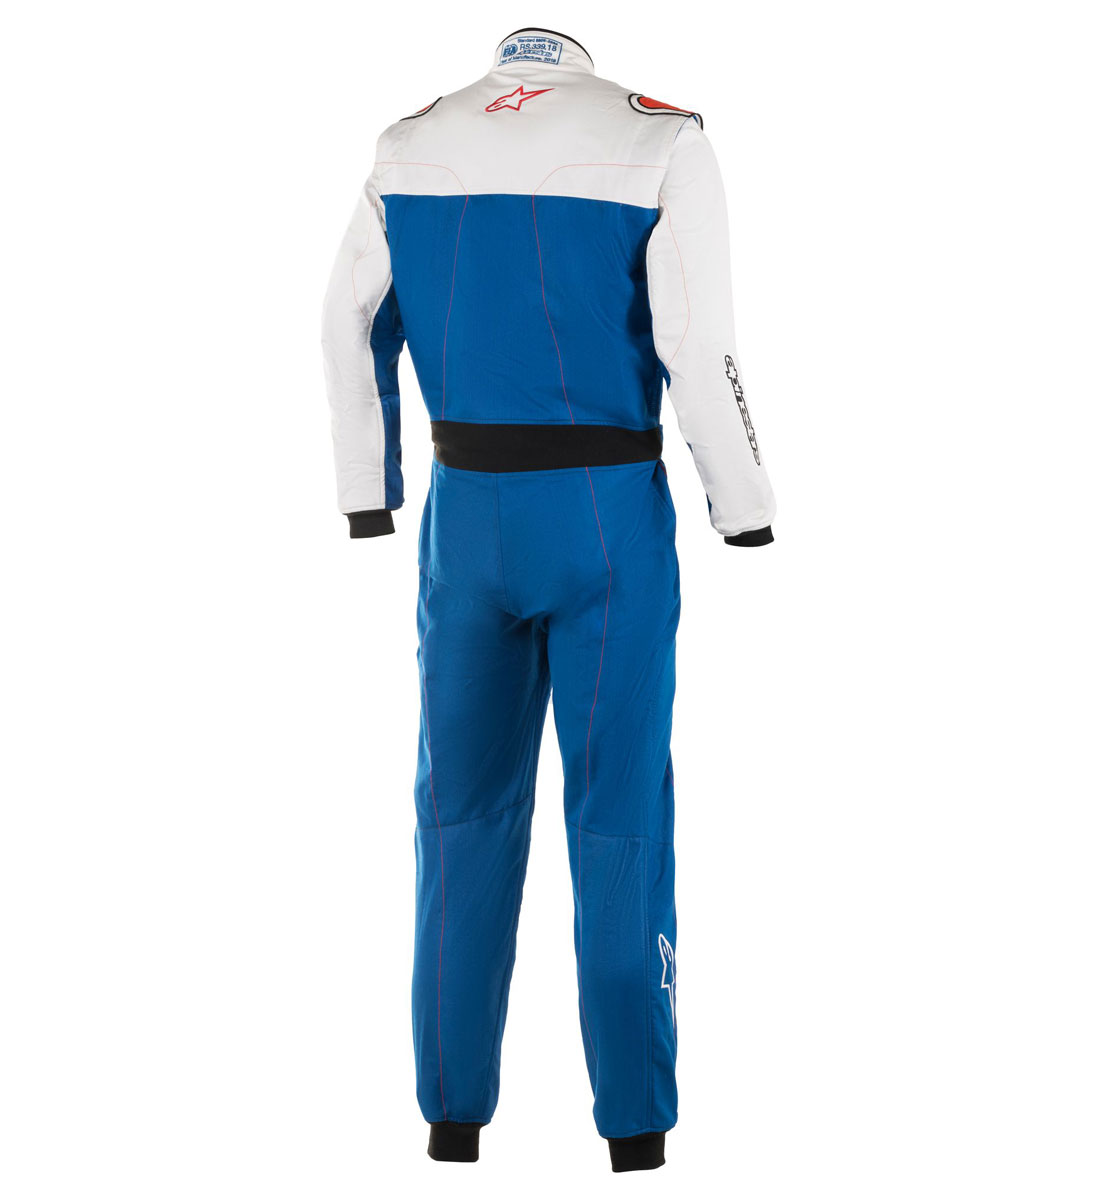 Alpinestars Stratos Race Suit - Royal Blue/White/Red